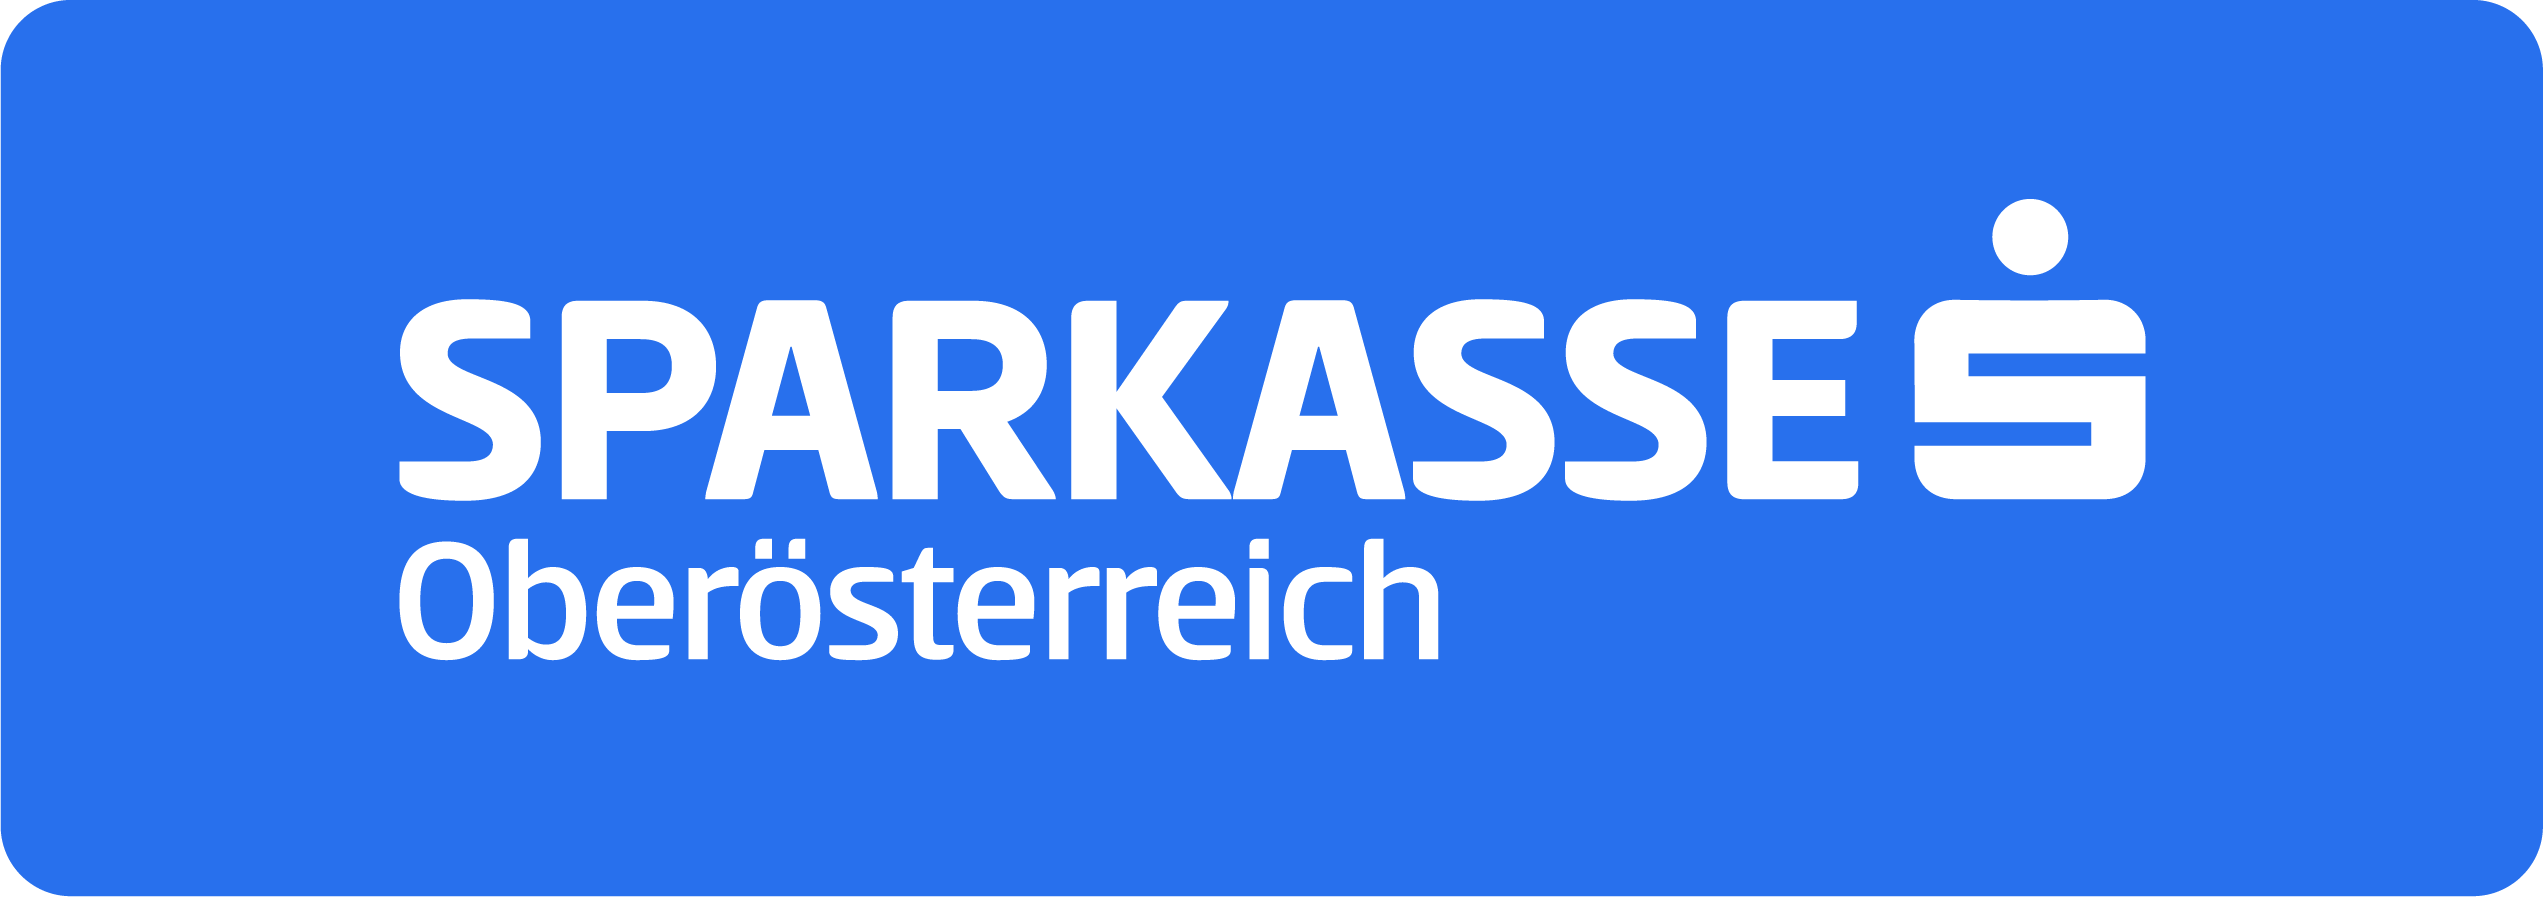 SPK-Oberoesterreich_Special_screen_RGB